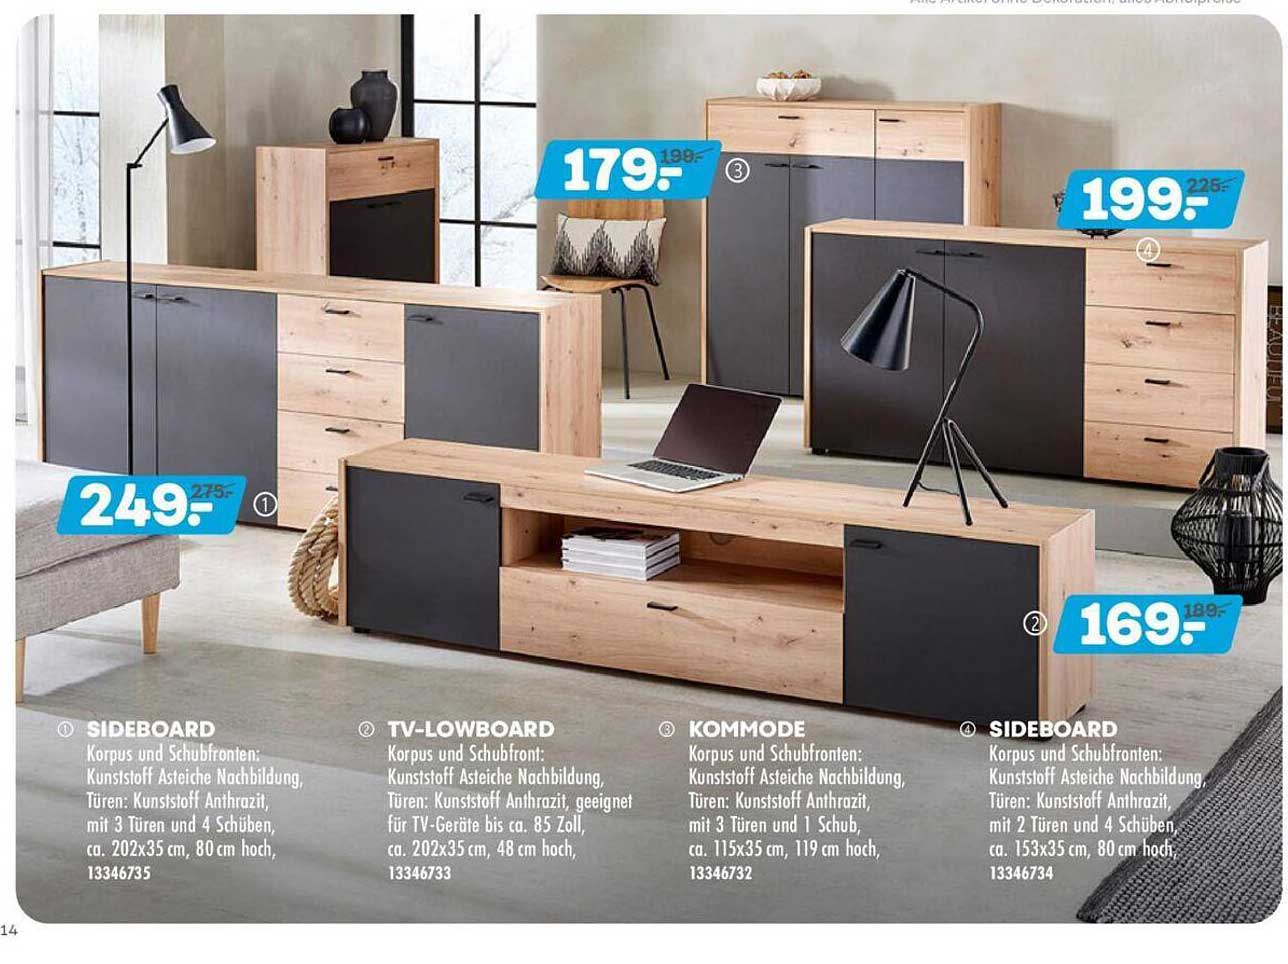 Möbel Kraft Sideboard, Tv-lowboard, Kommode, Sideboard